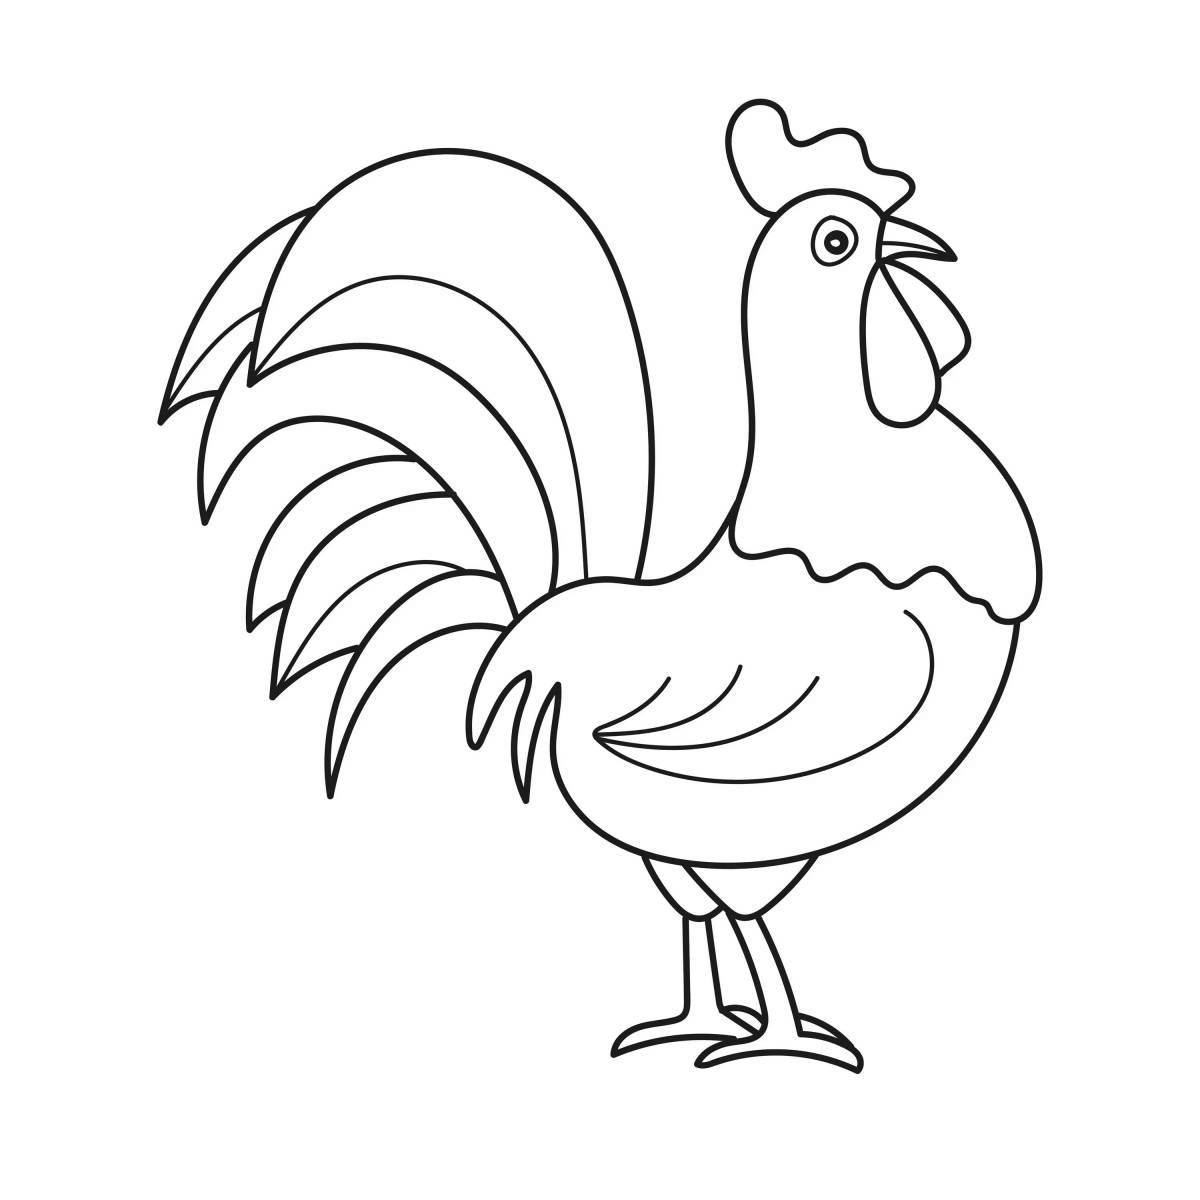 Exuberant cockerel drawing